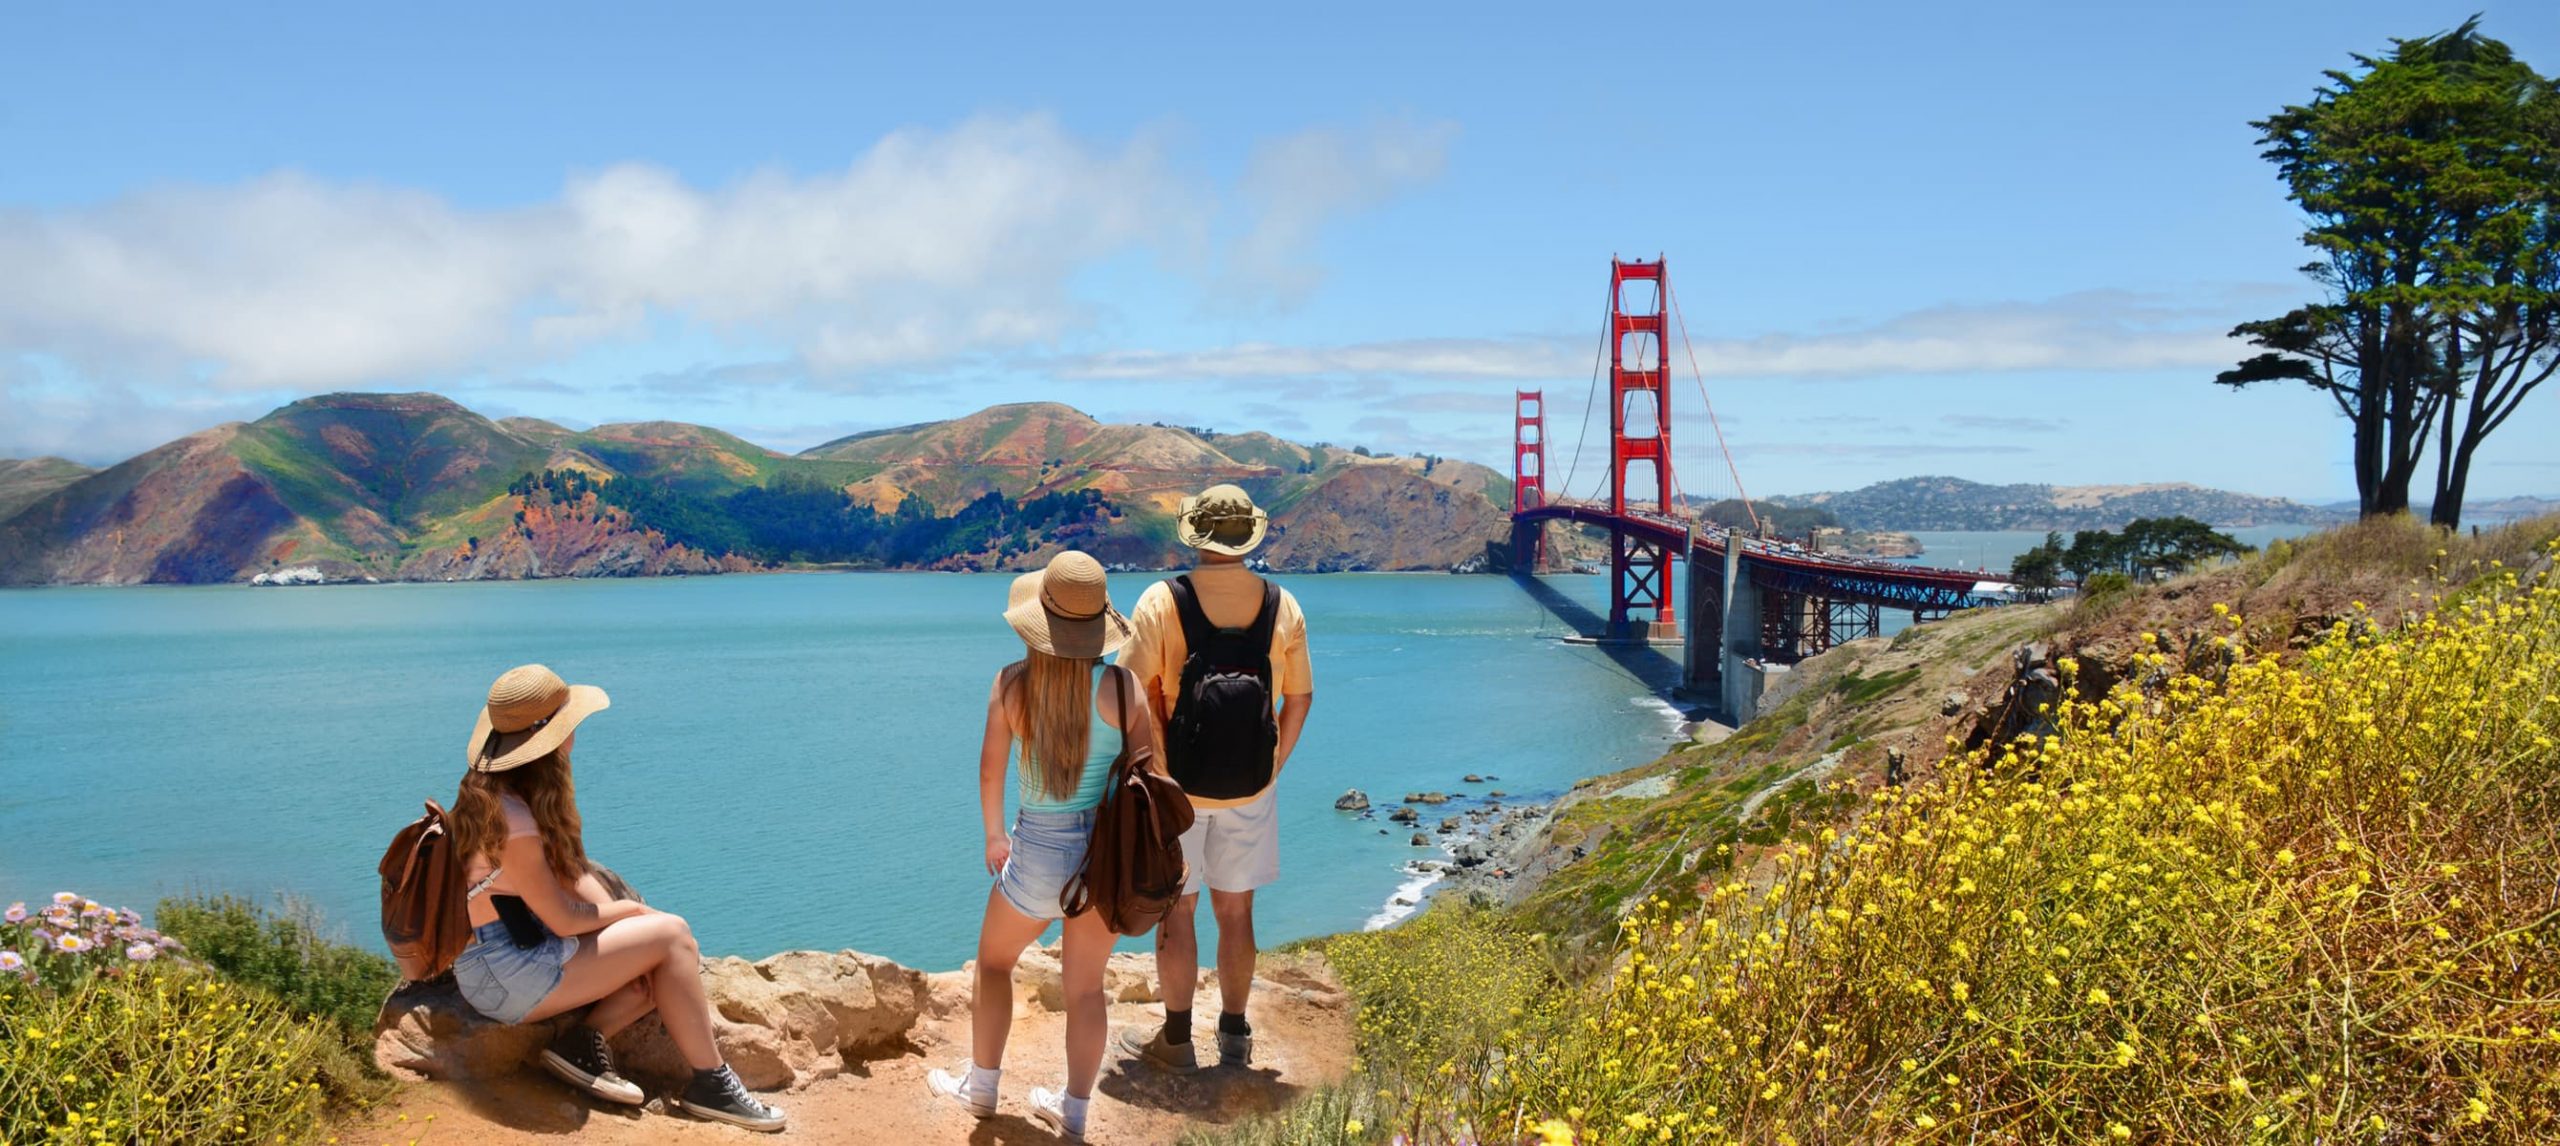 Couple overlooking the Golden Gate bridge, in San Francisco, California.